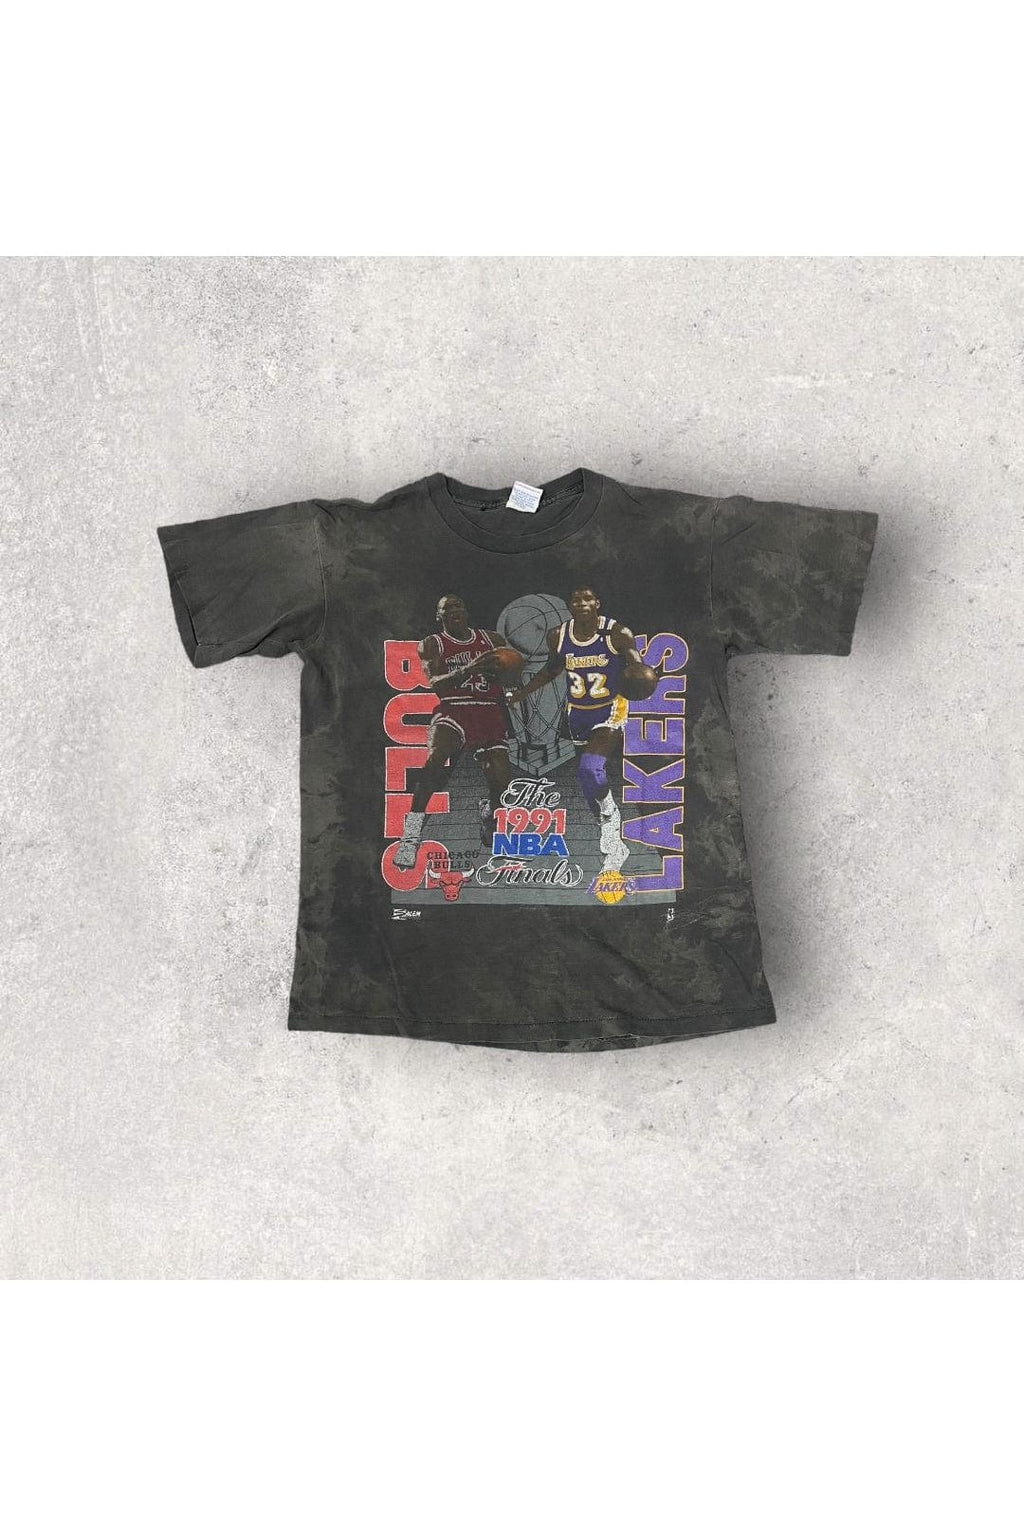 Vintage Chicago Bulls 1991 NBA Champions Salem Sportswear Shirt